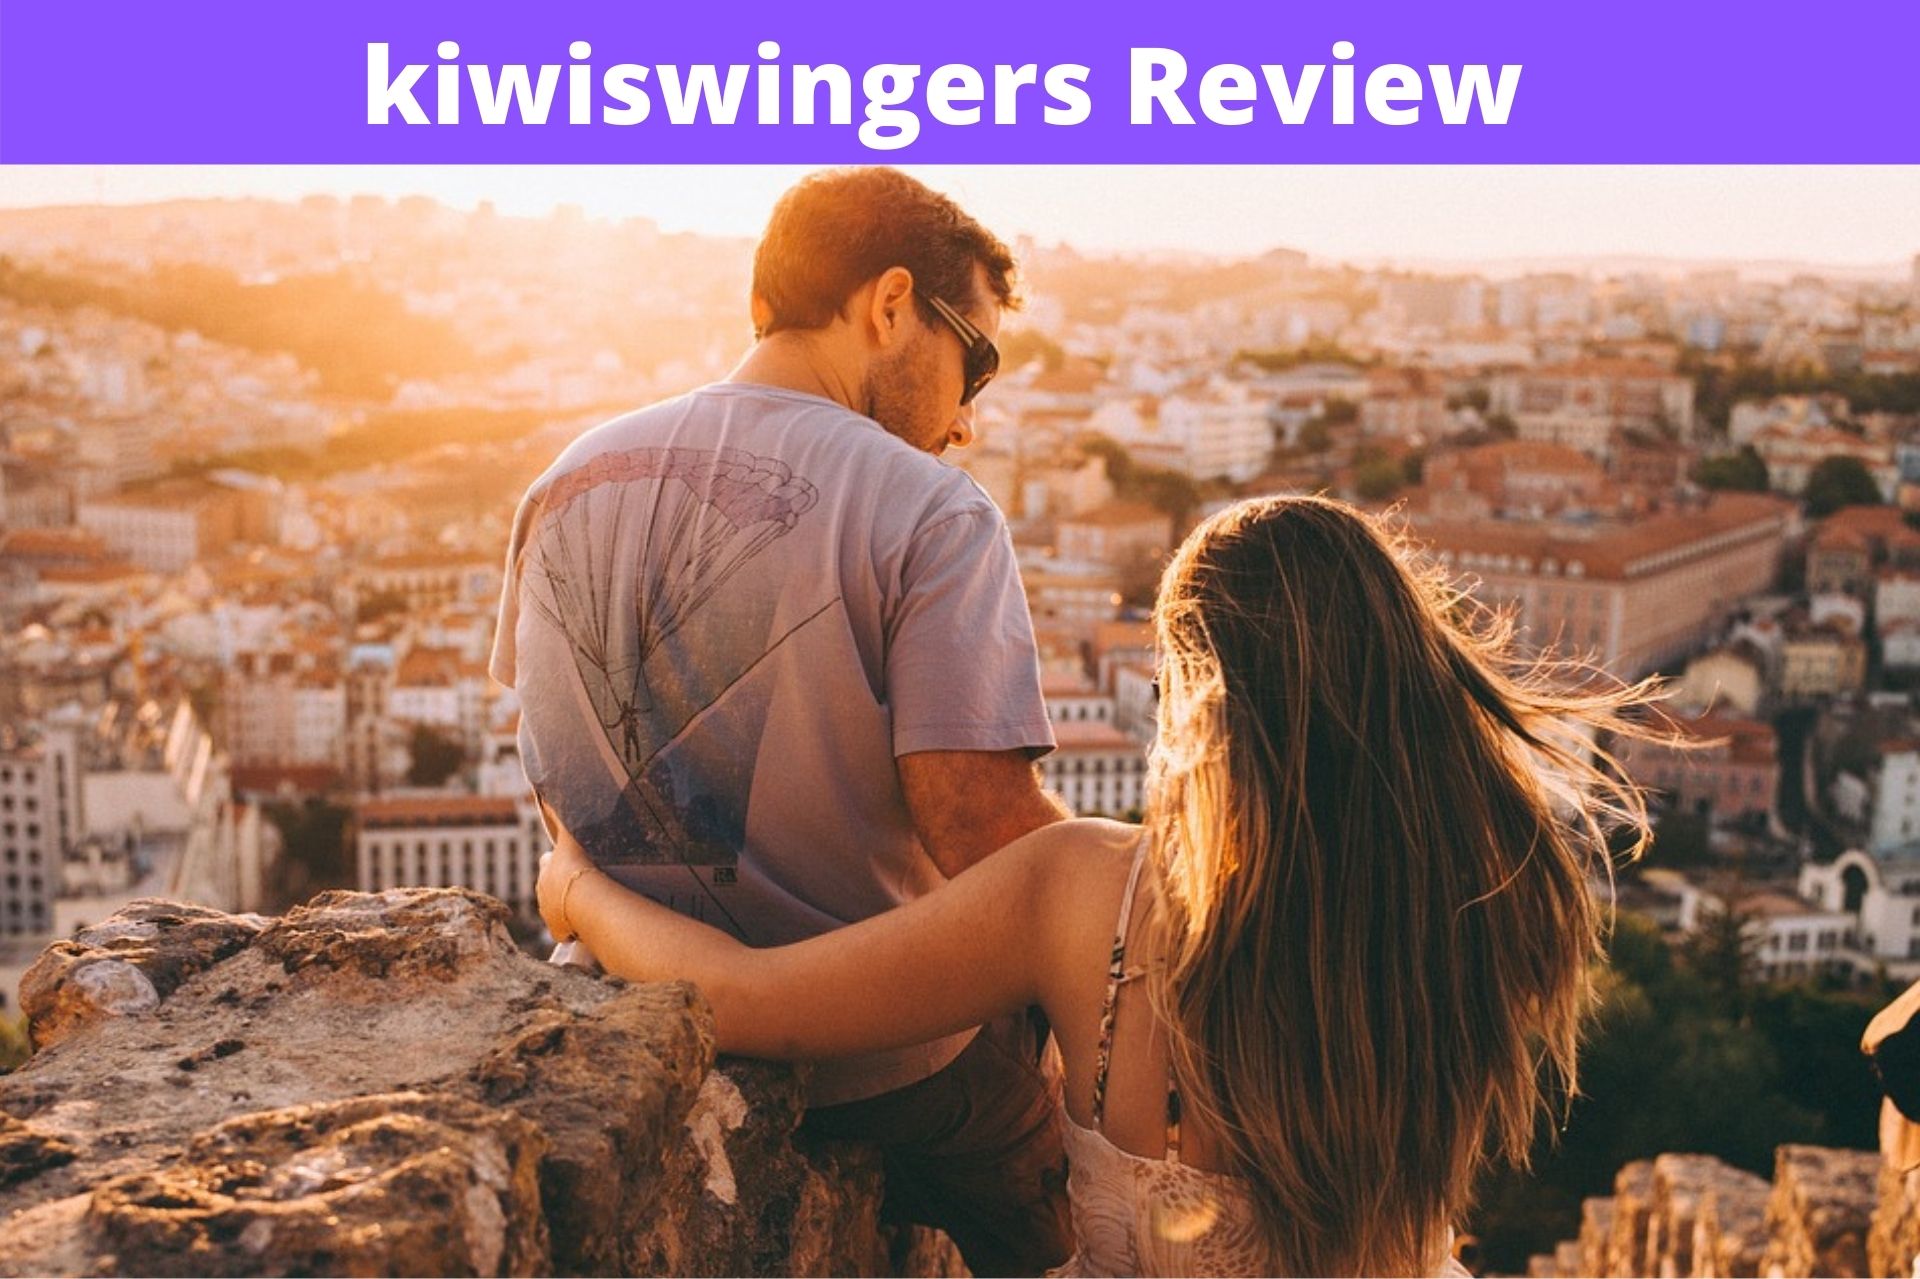 kiwiswingers review